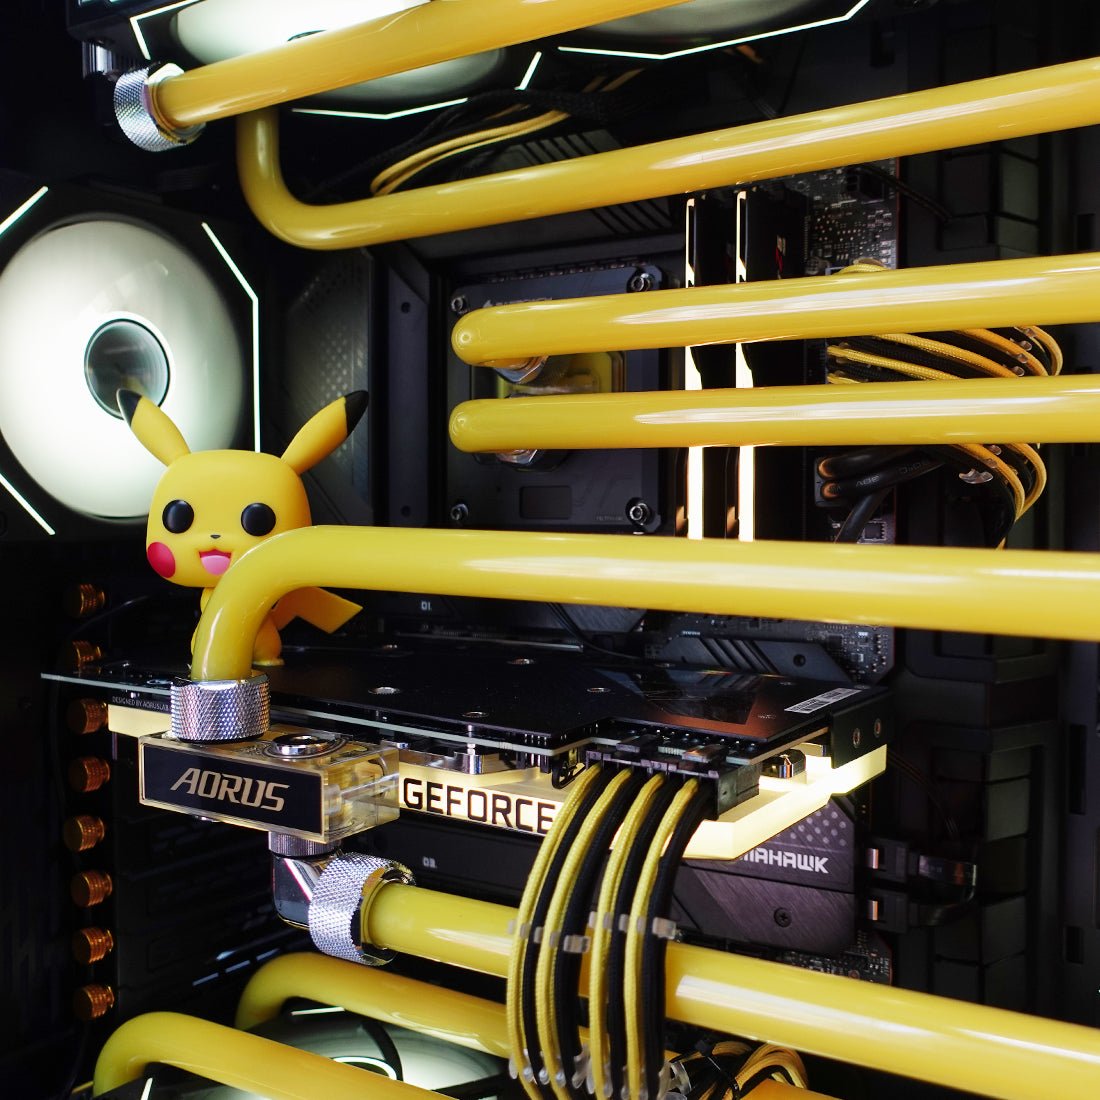 Pikachu Build | كمبيوتر بيكاتشو - Store 974 | ستور ٩٧٤